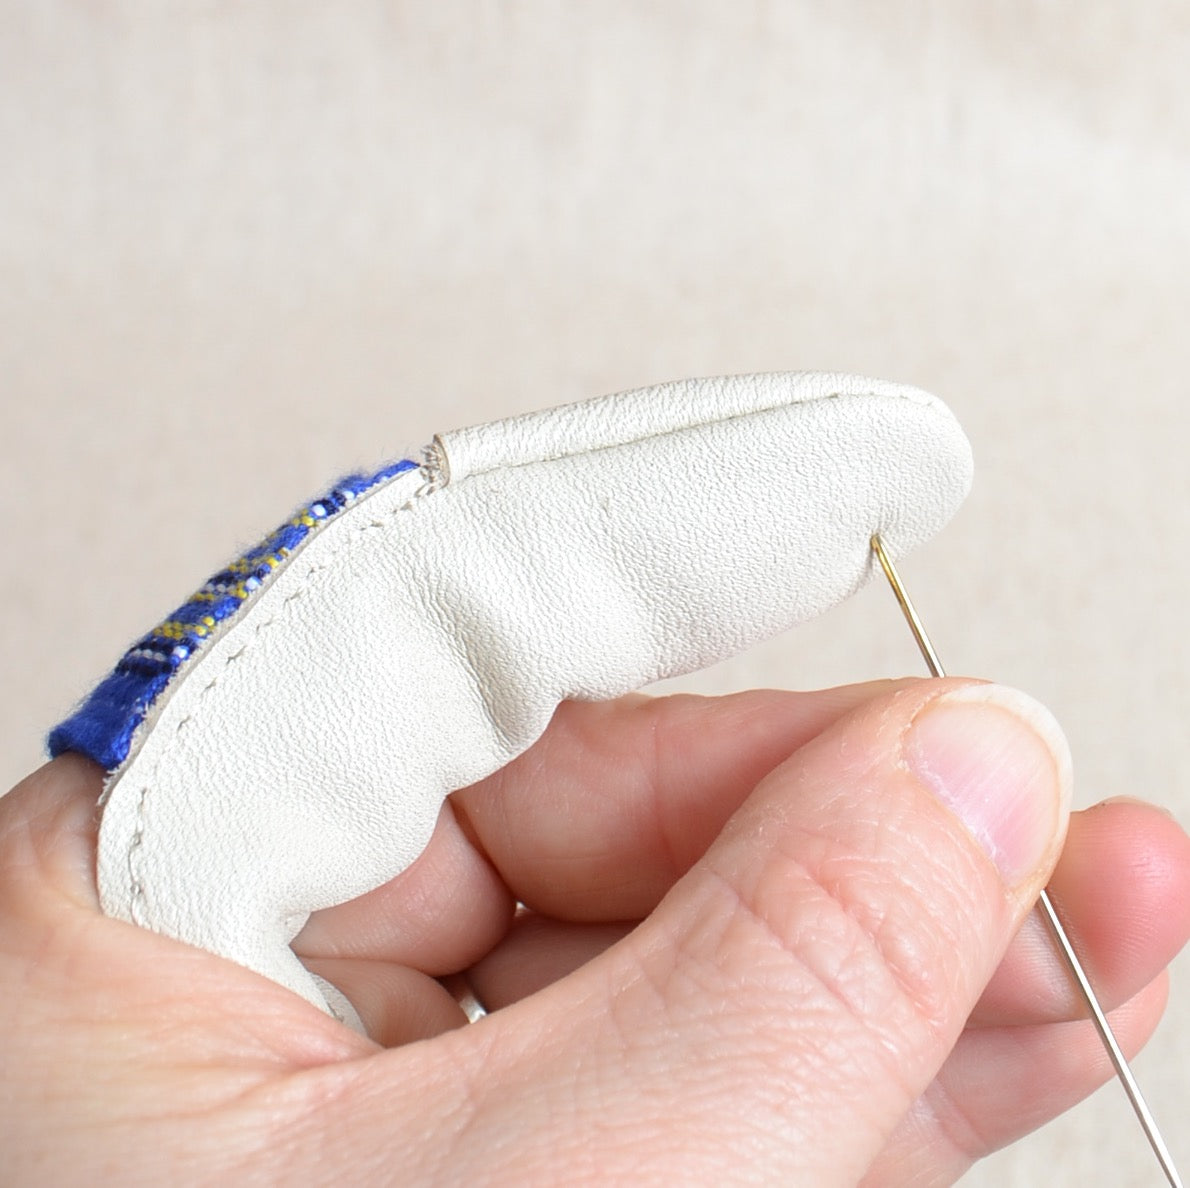 Leather 'Glove' Thimble - A Threaded Needle